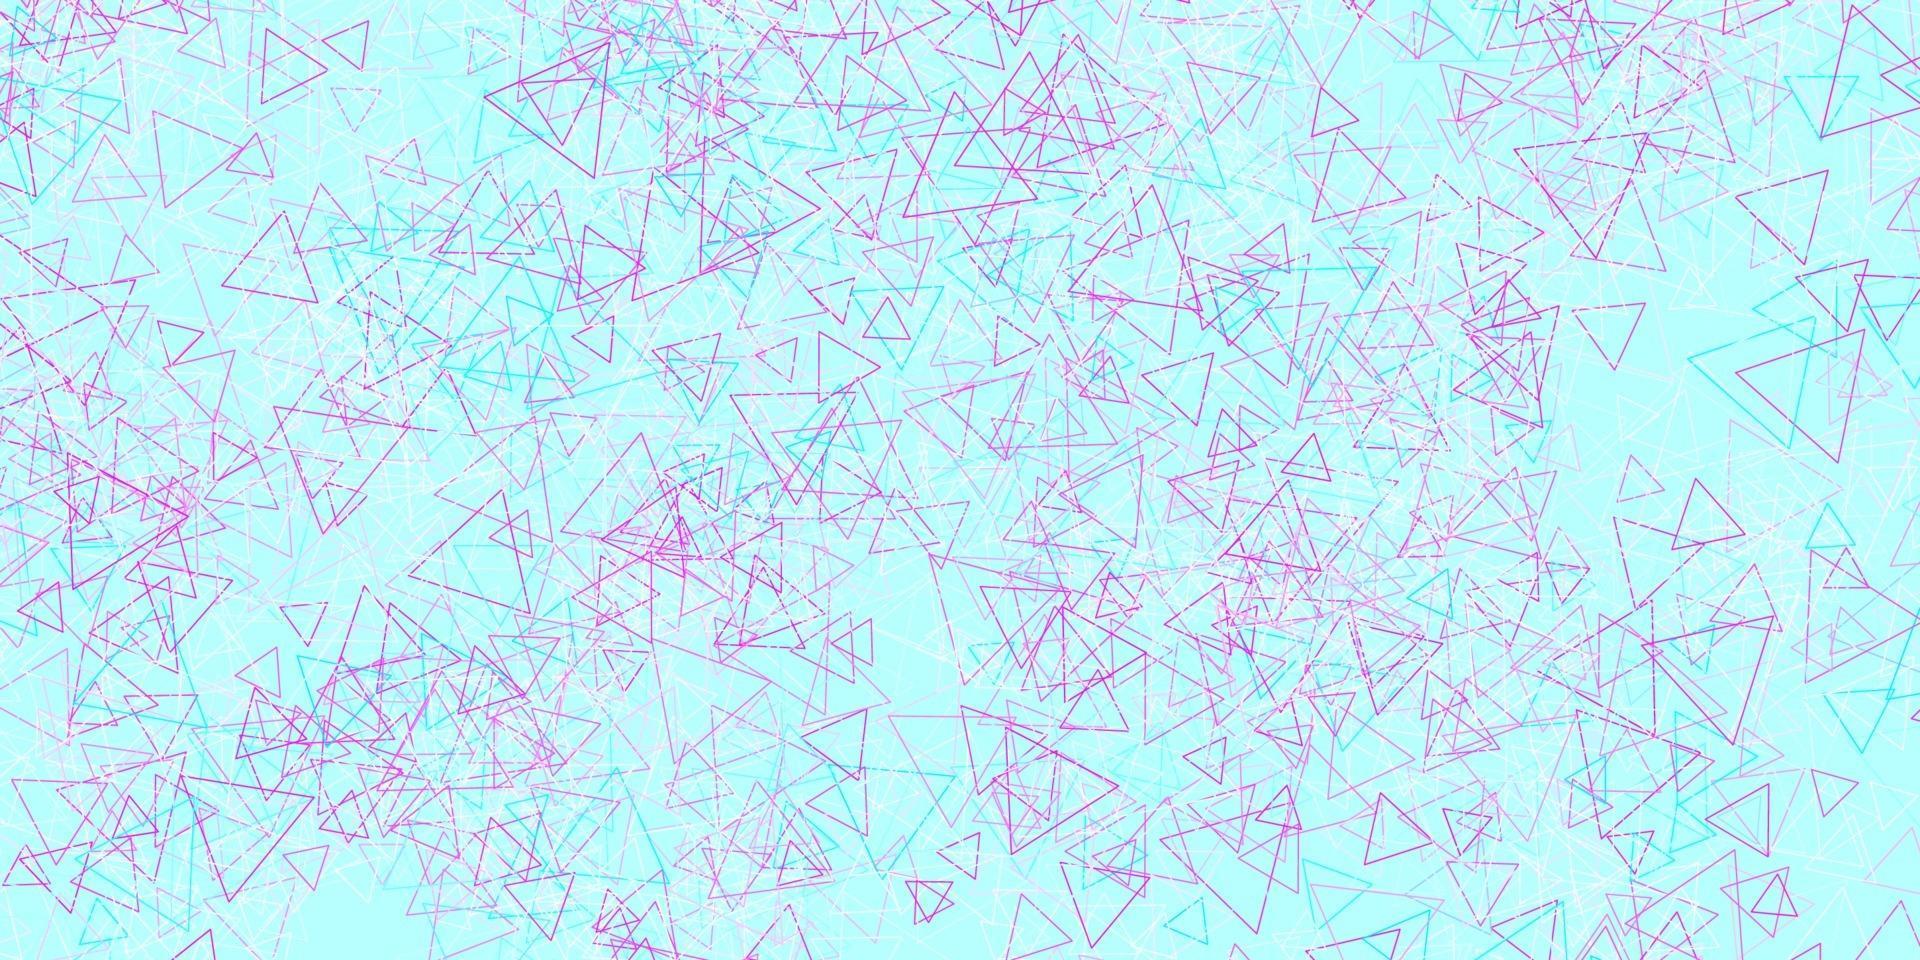 fundo vector rosa claro, azul com triângulos.